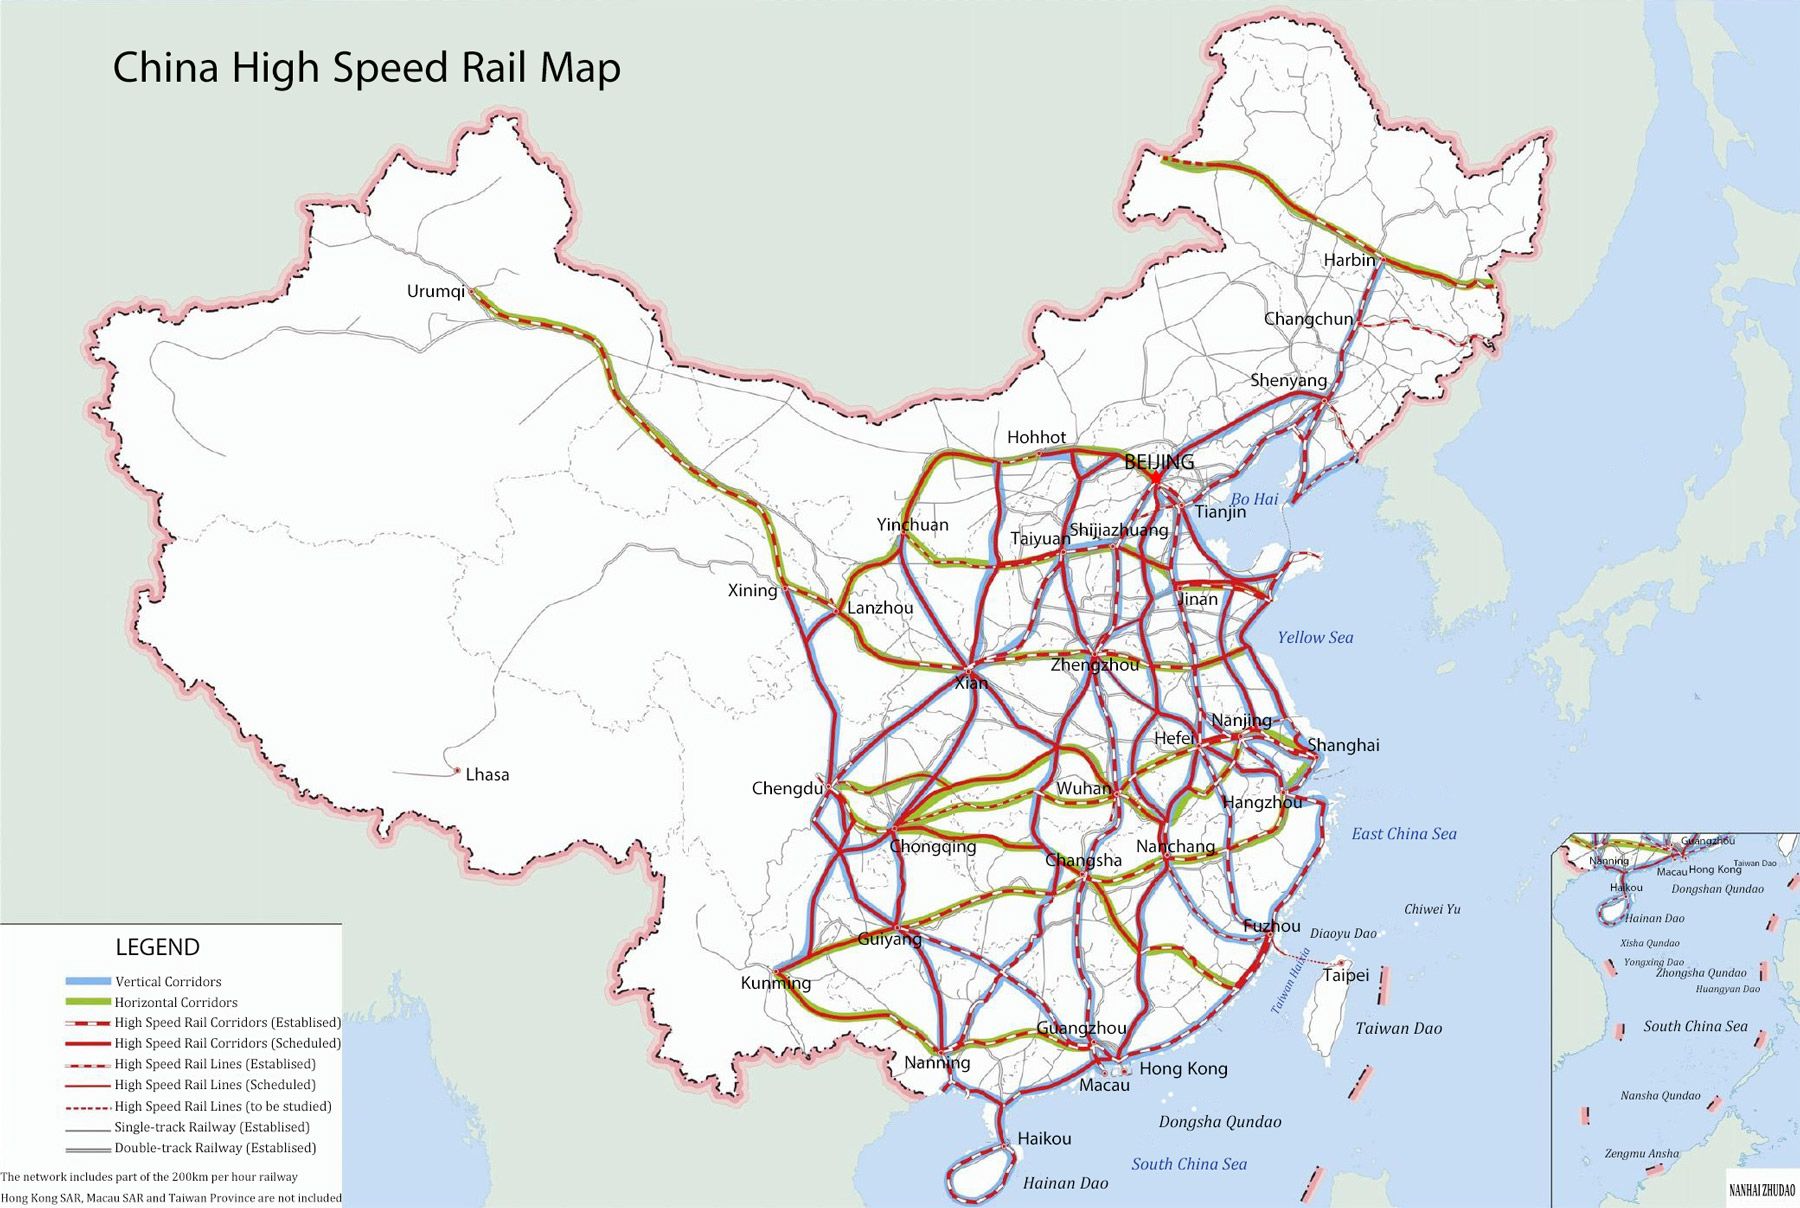 China High Speed Railway Map 